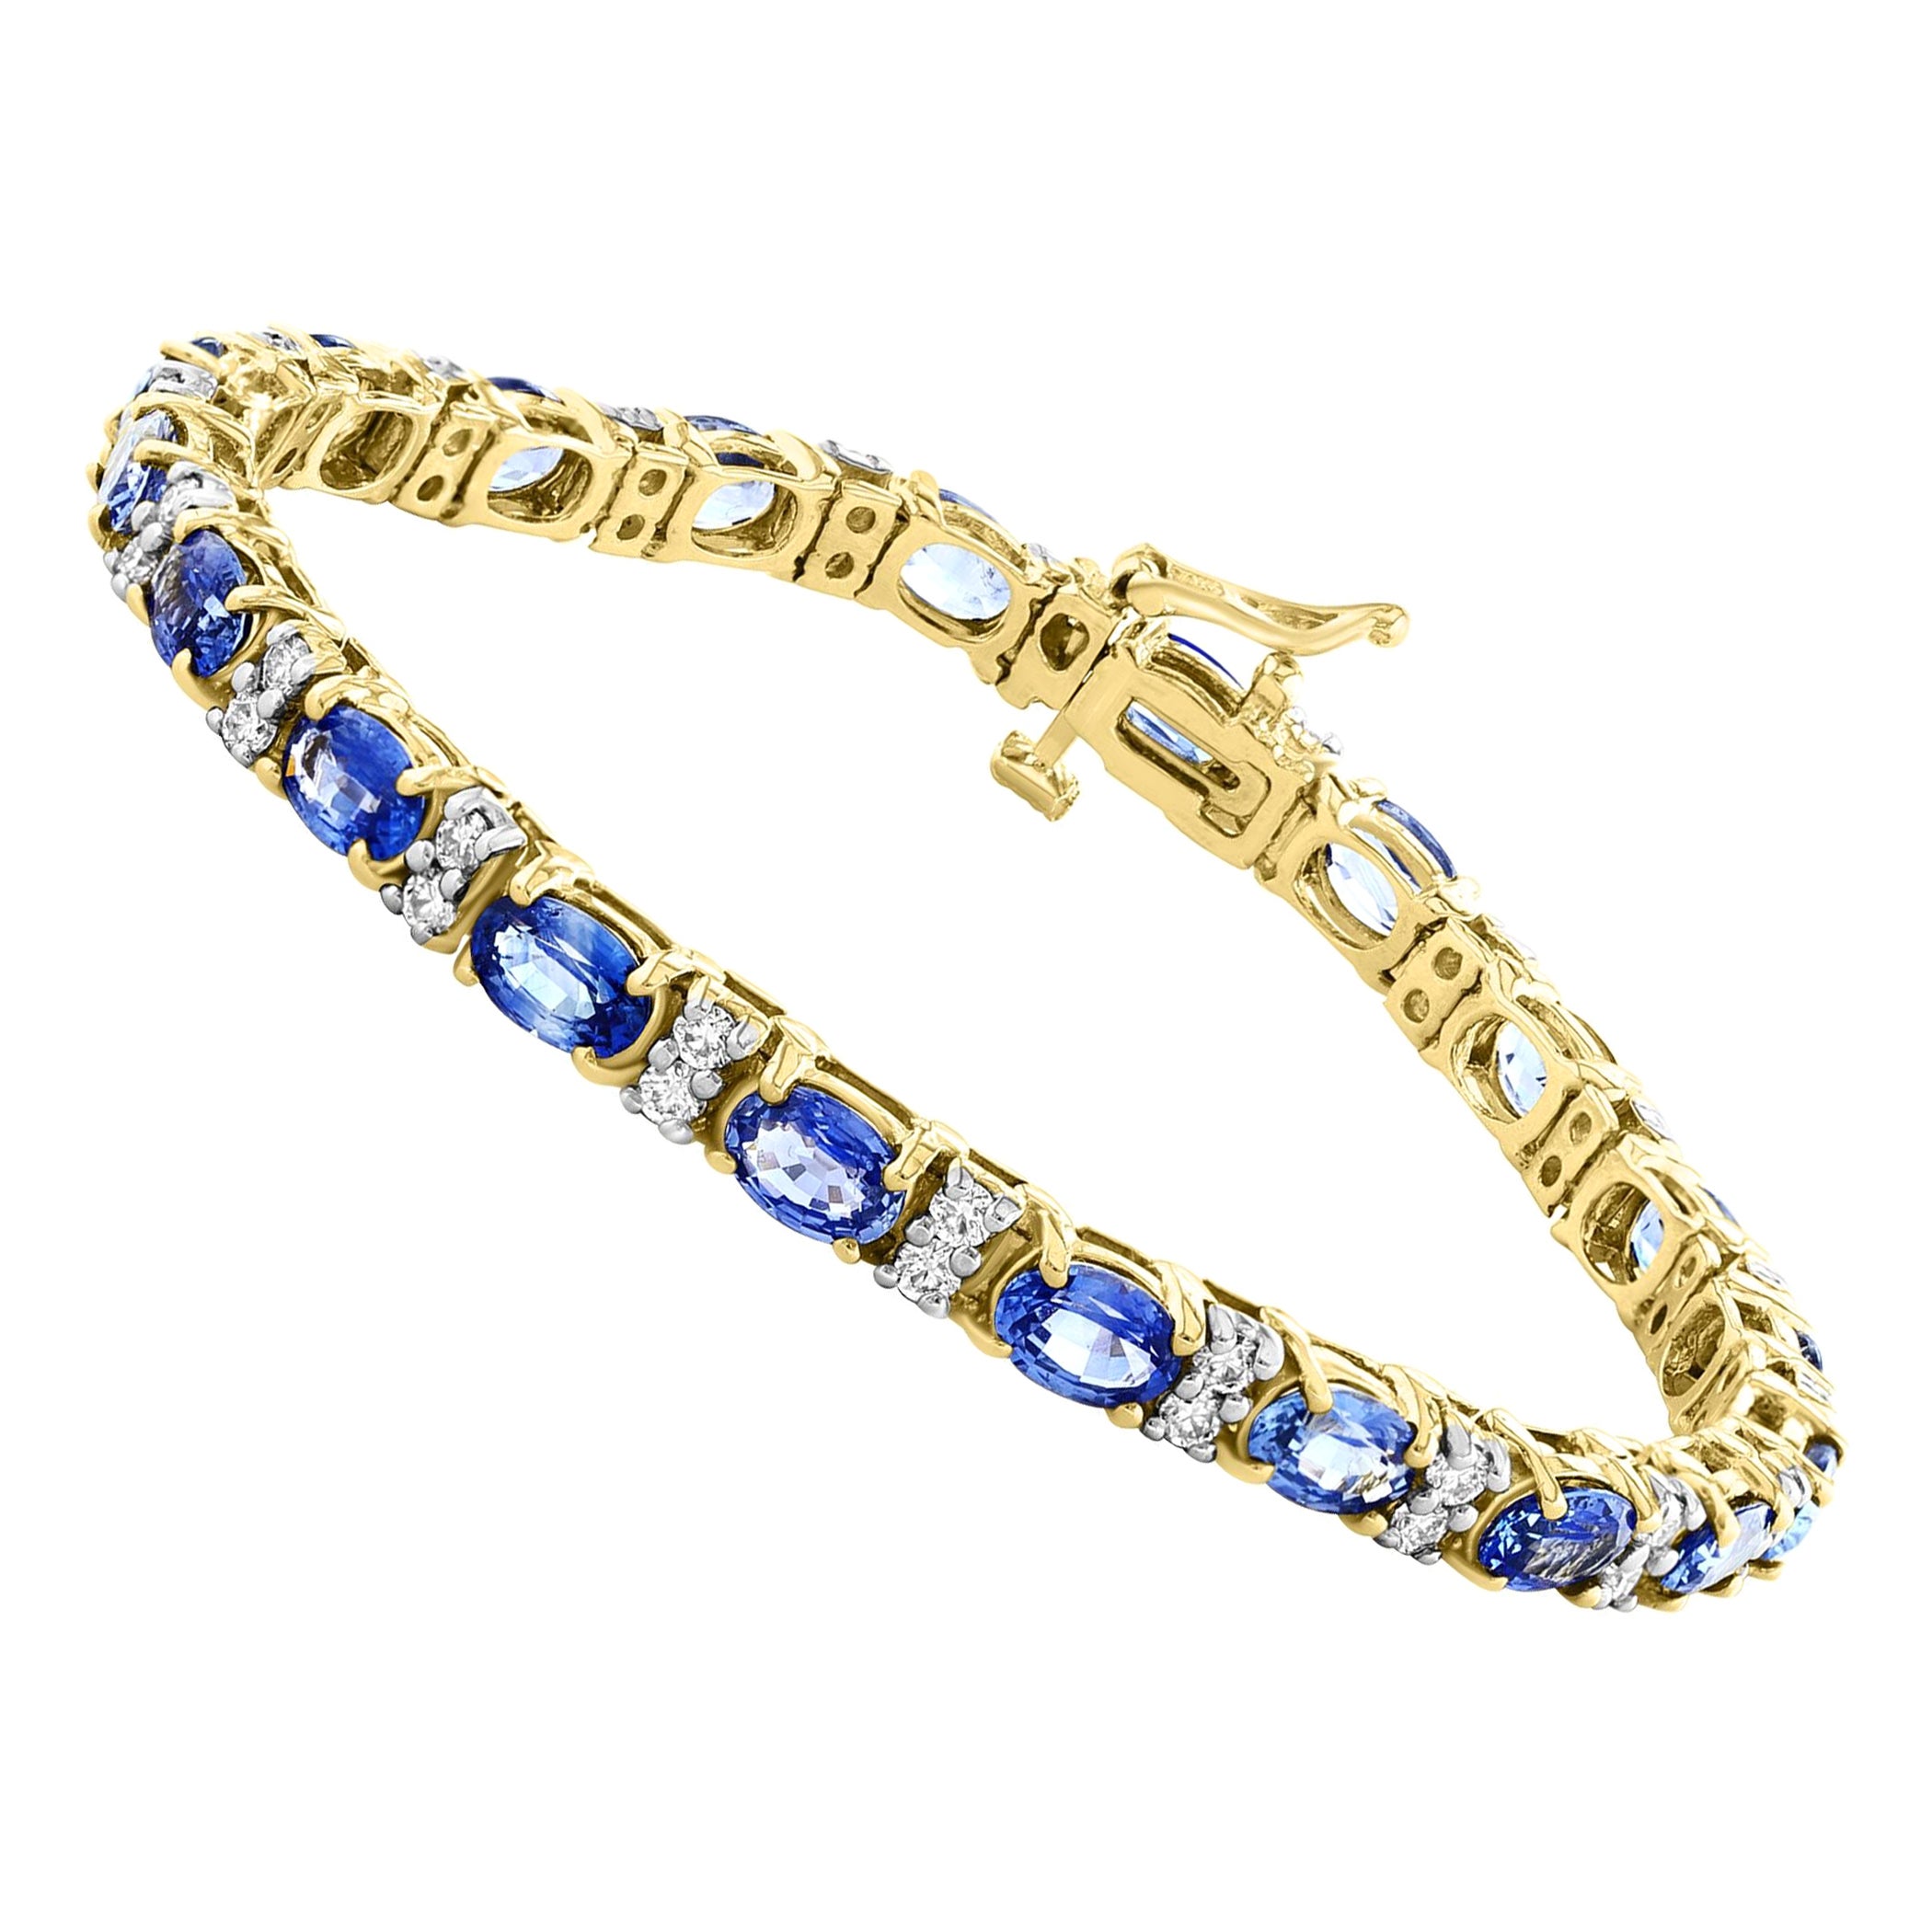 12 Carat Natural Sapphire & Diamond Cocktail Tennis Bracelet 14 Kt Yellow Gold